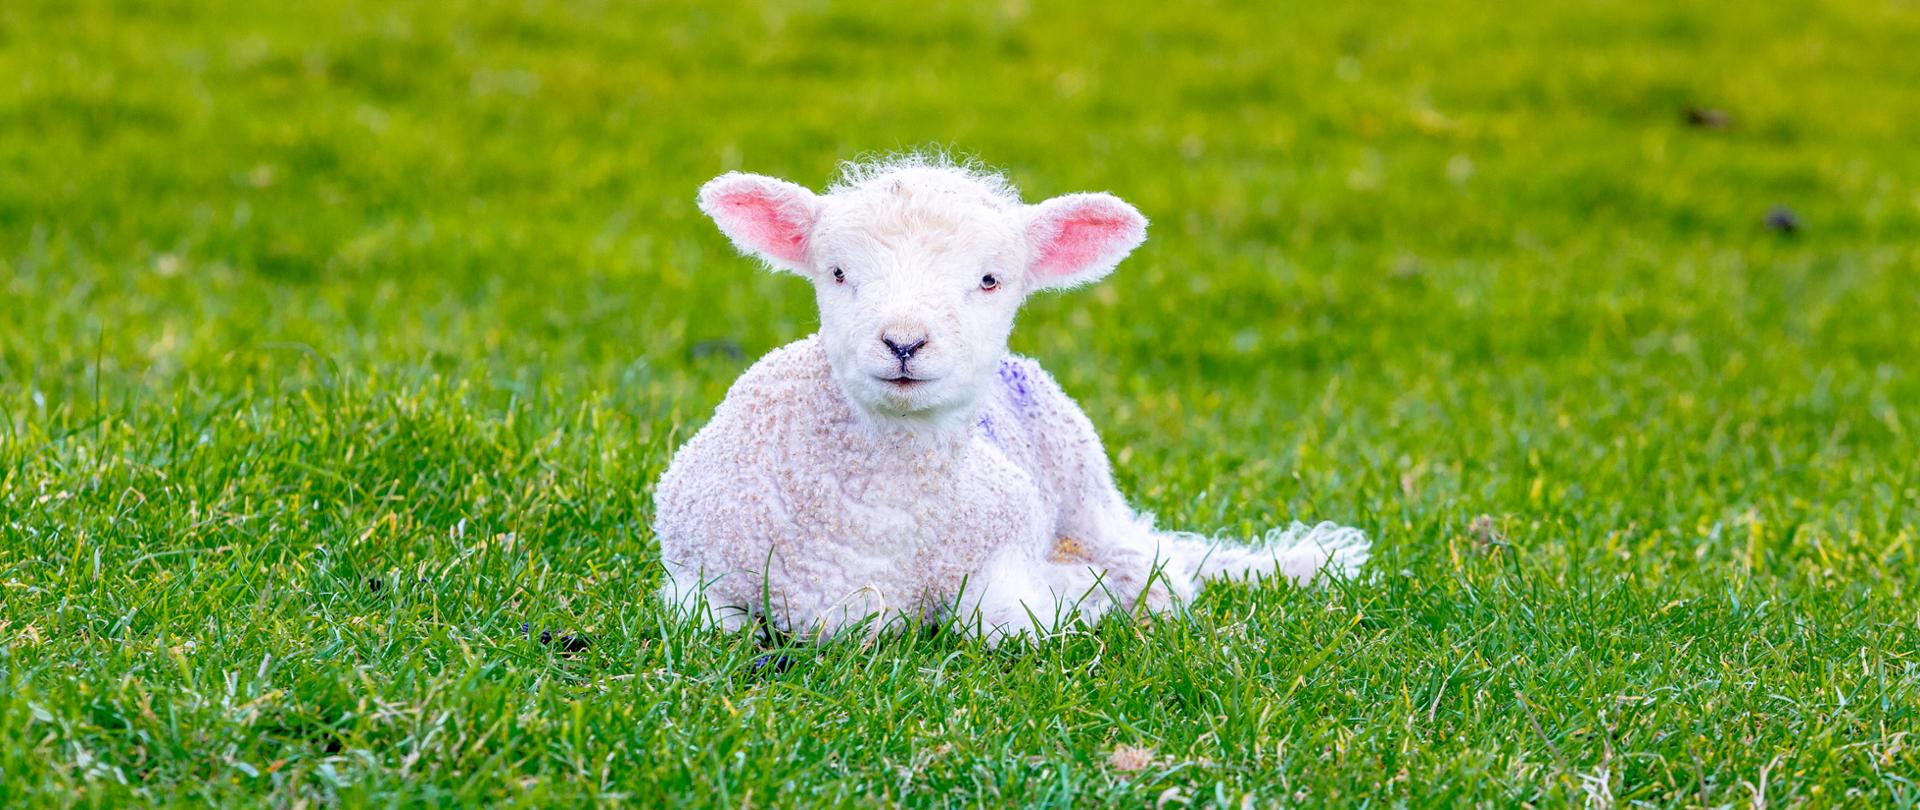 Newborn baby sheep on green gras in England